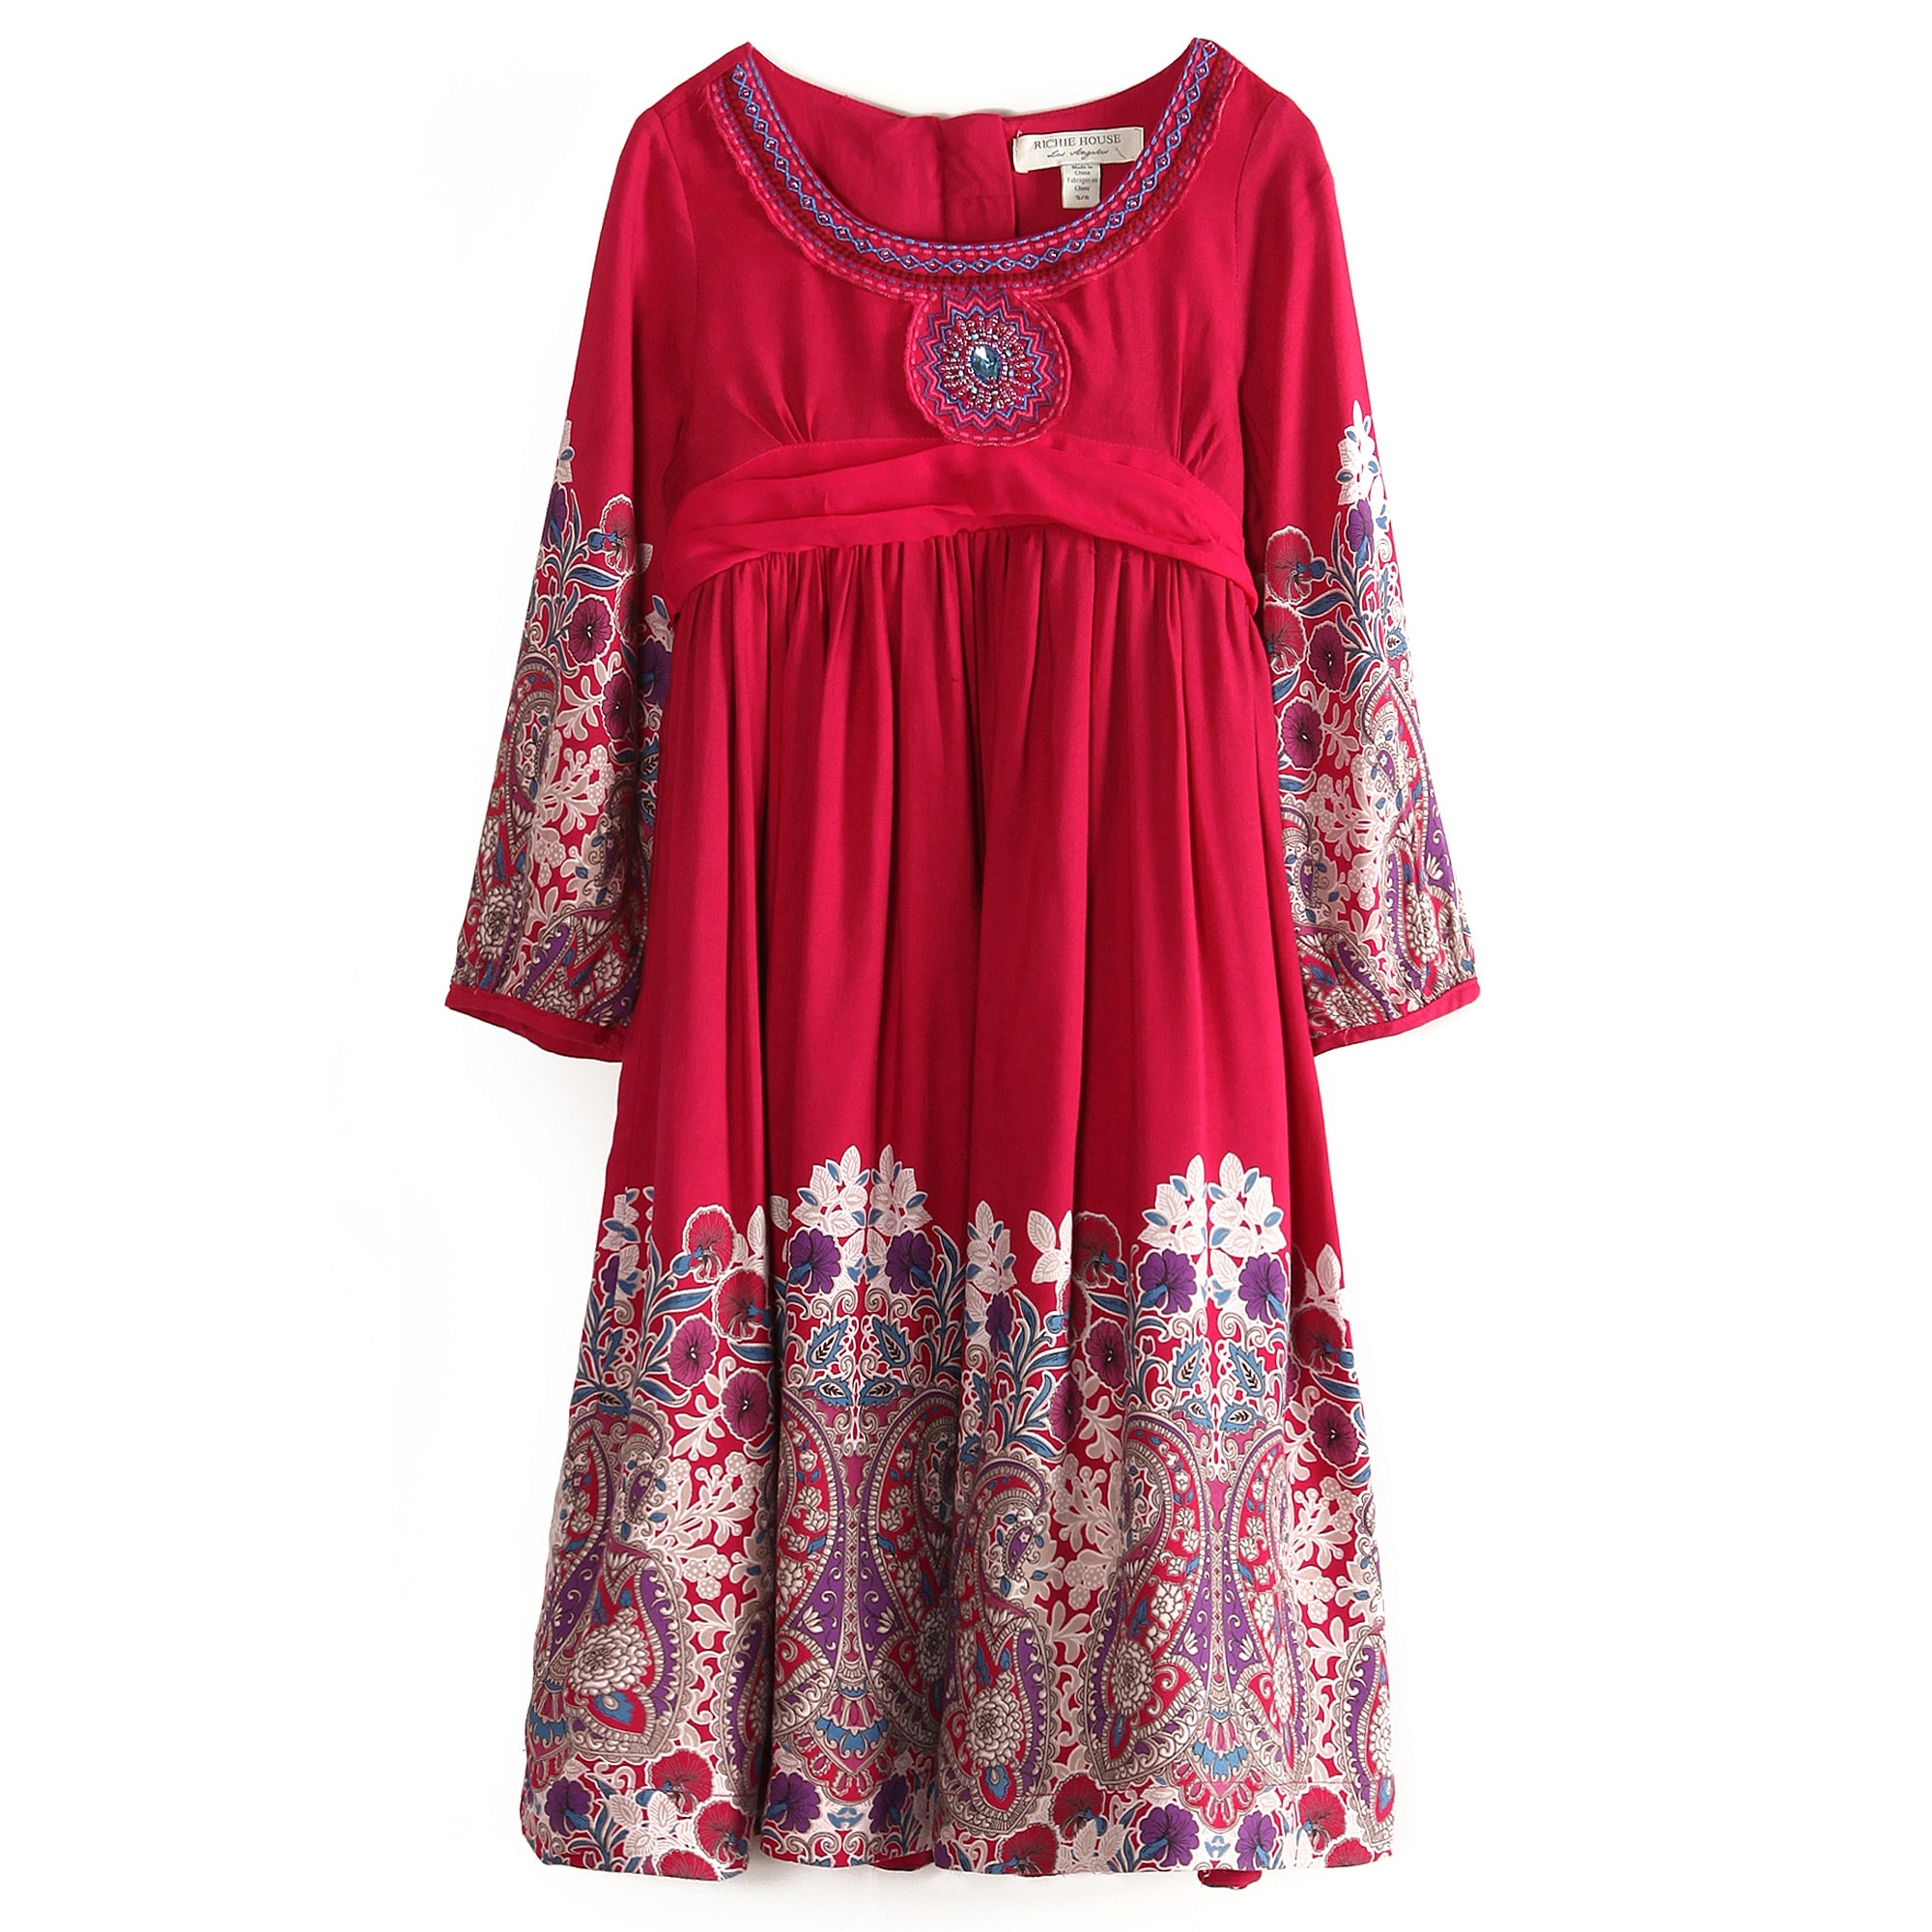 red gypsy dress